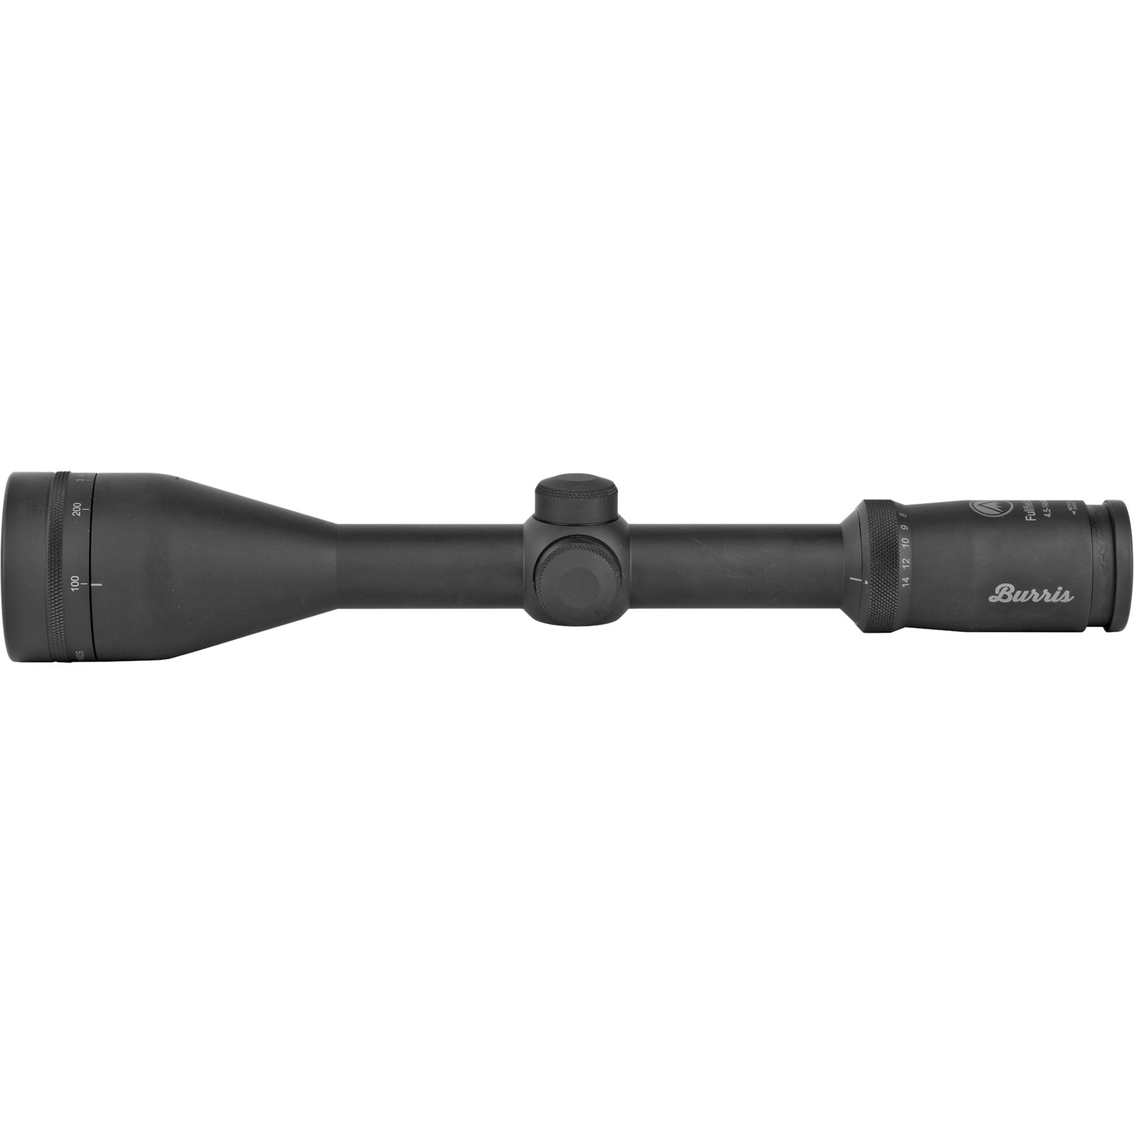 Burris Fullfield II in 4.5-14x42 Ballplex Matte Riflescope - Image 3 of 4